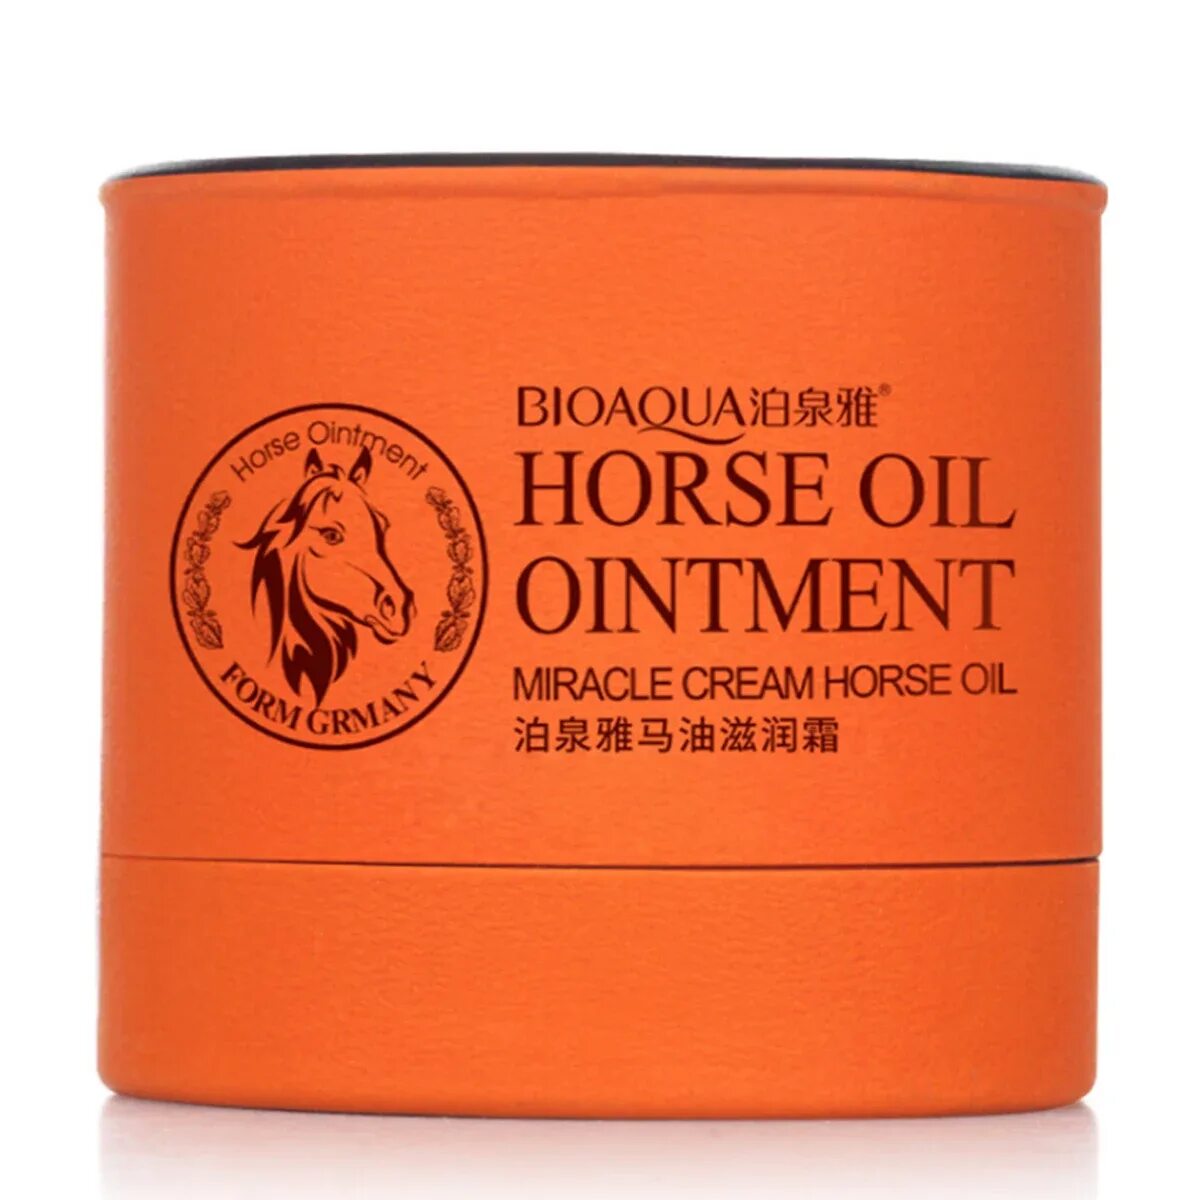 Крем с лошадиным маслом. Horse Oil Ointment крем для лица. Horse Oil Ointment Miracle Cream крем против морщин для лица, 70 г. BIOAQUA Horse Oil Ointment. Крем с лошадиным жиром БИОАКВА.